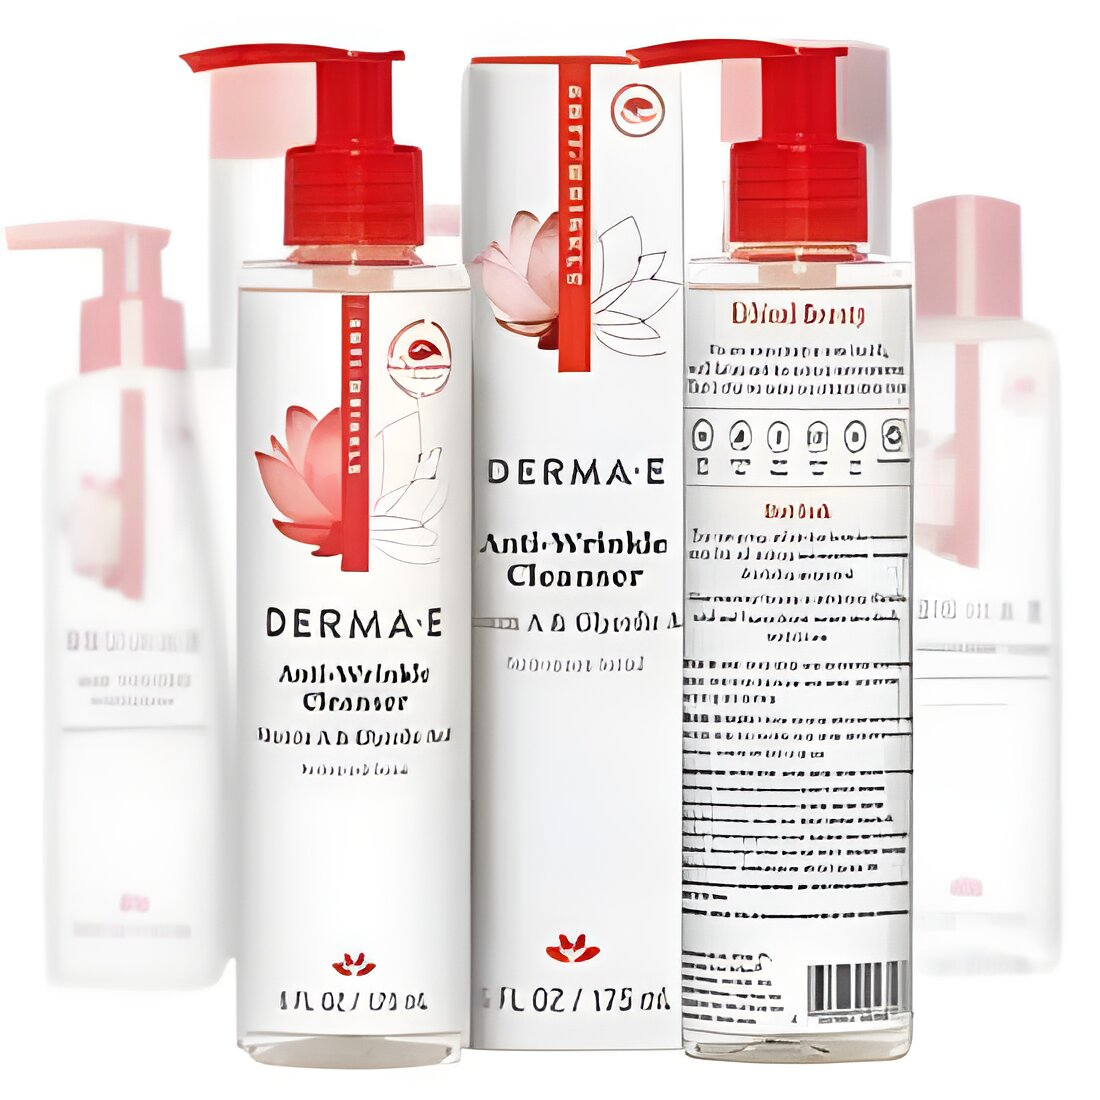 Free Derma E Anti-Wrinkle Cleanser